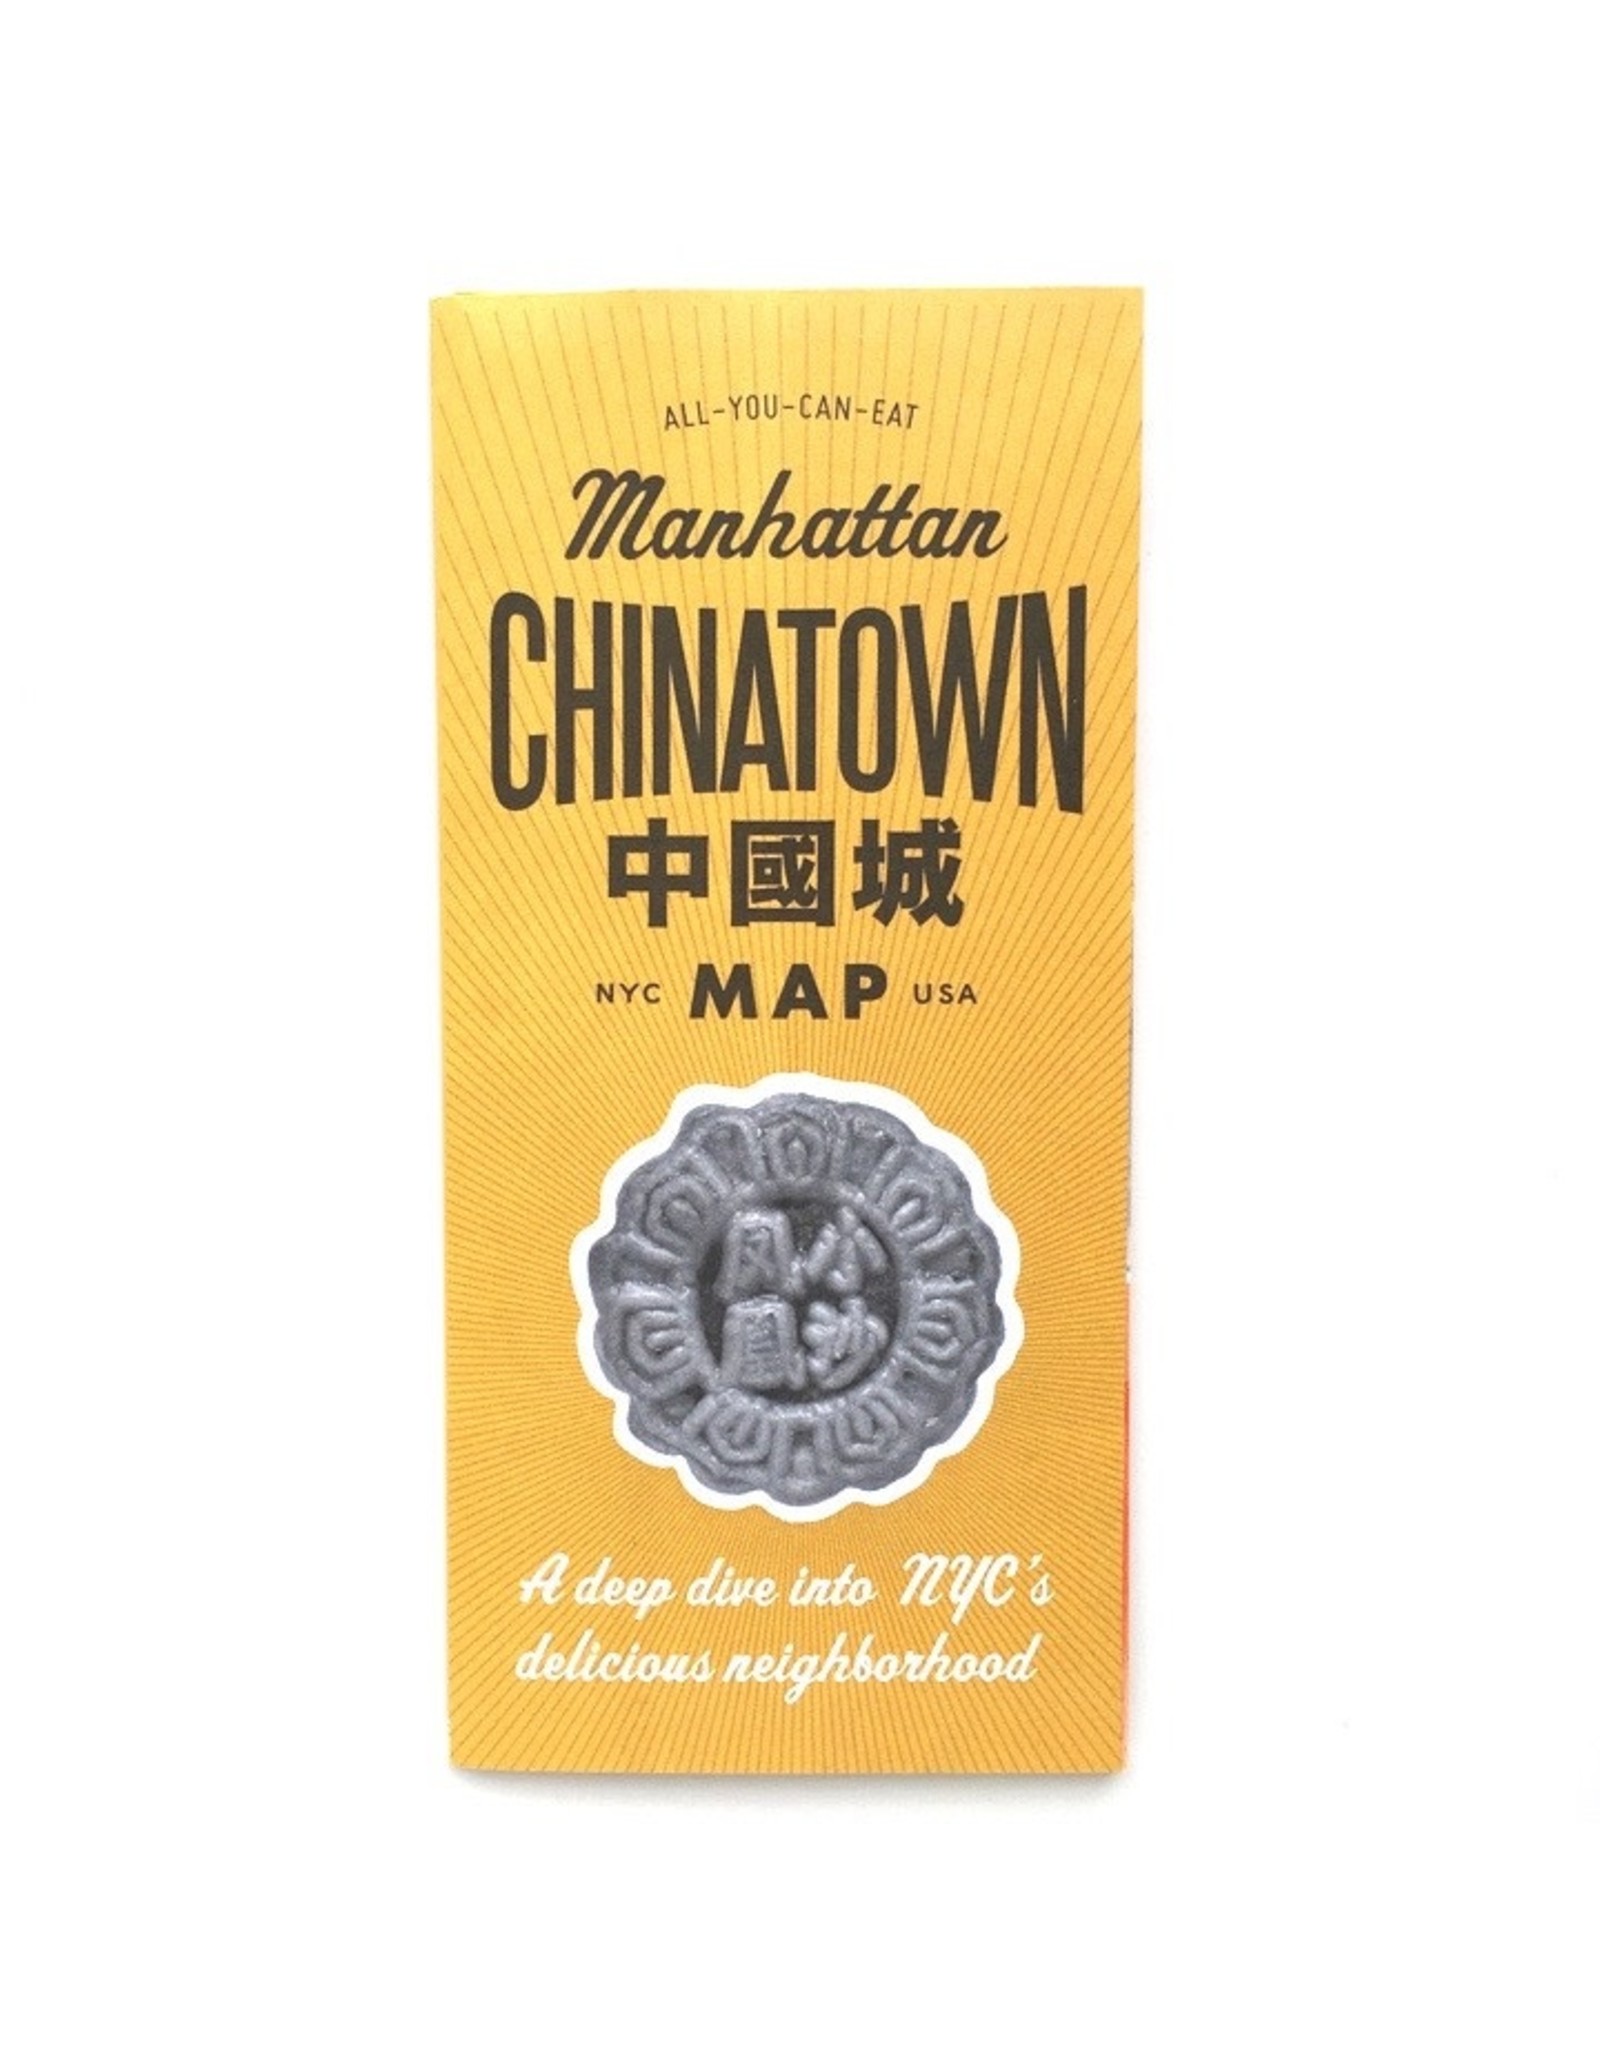 Manhattan Chinatown Map